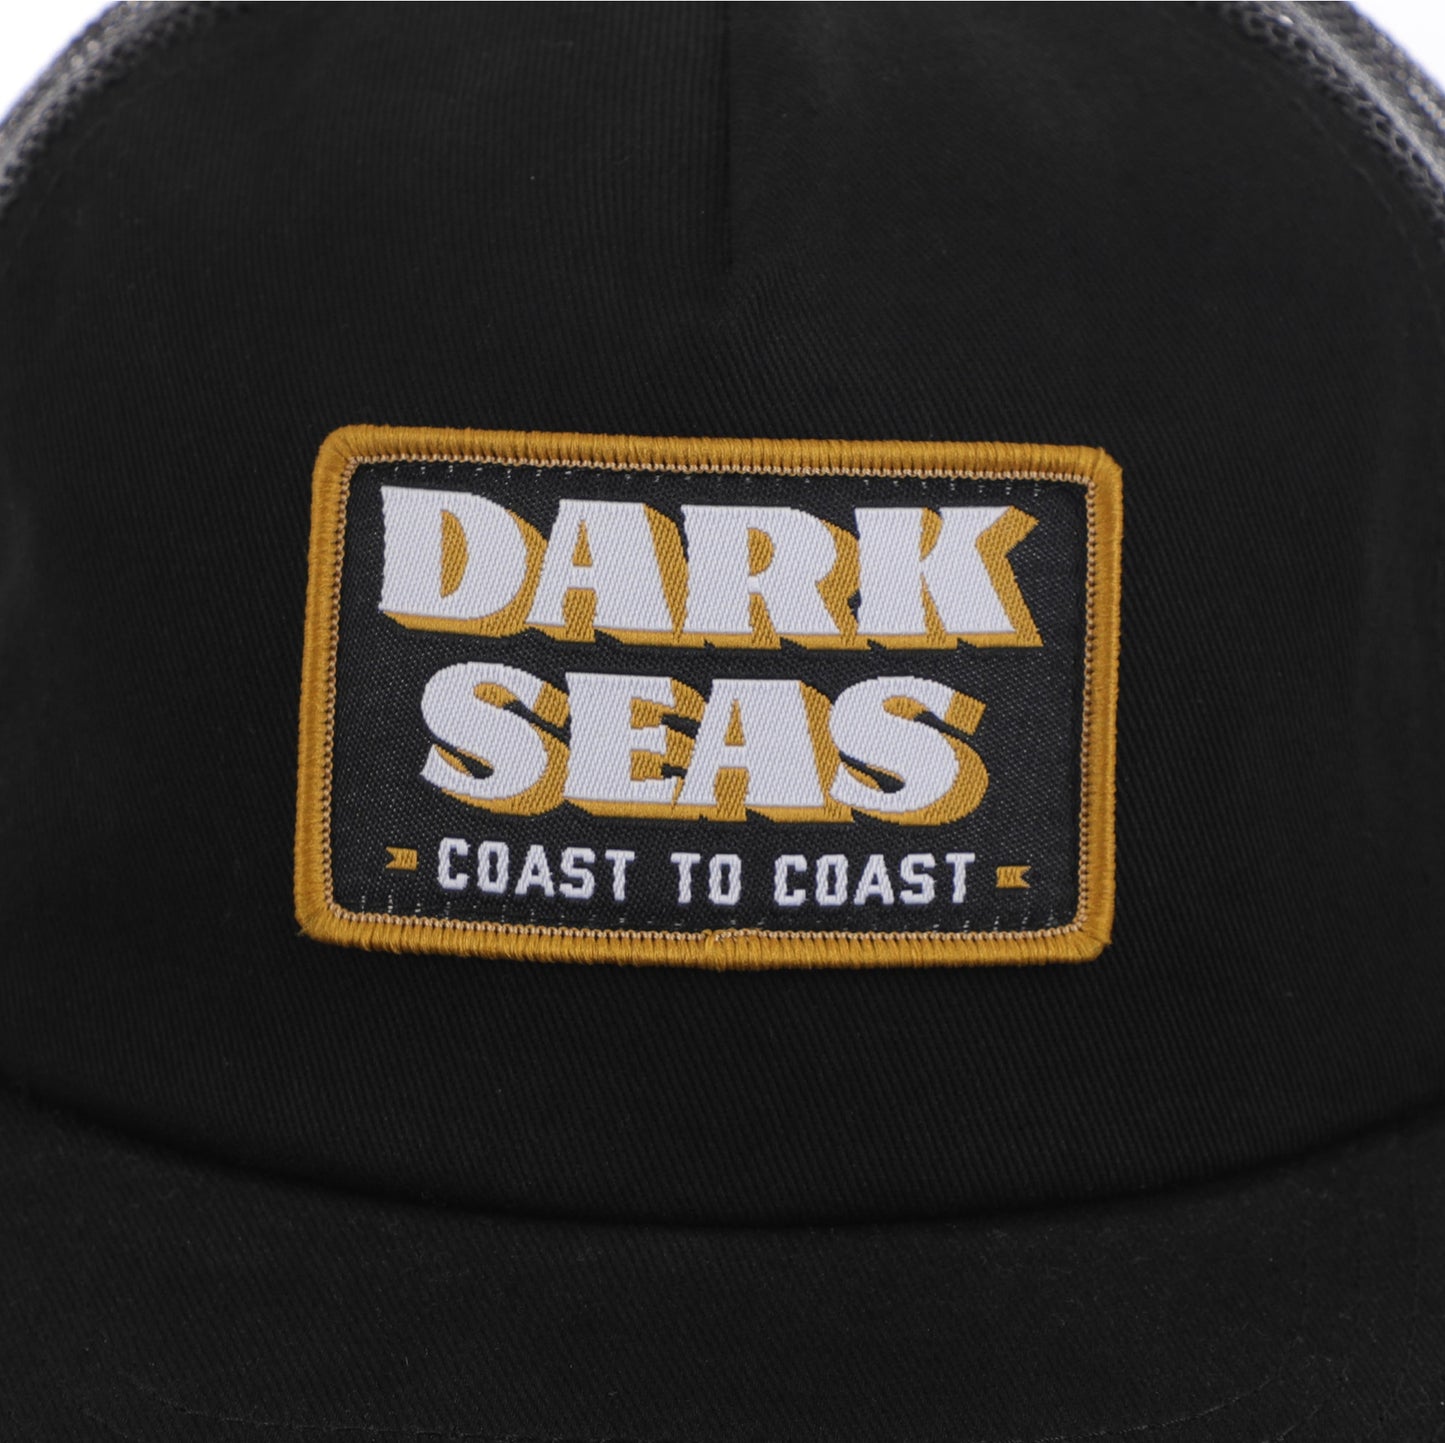 Dark Seas - Williams Trucker Hat